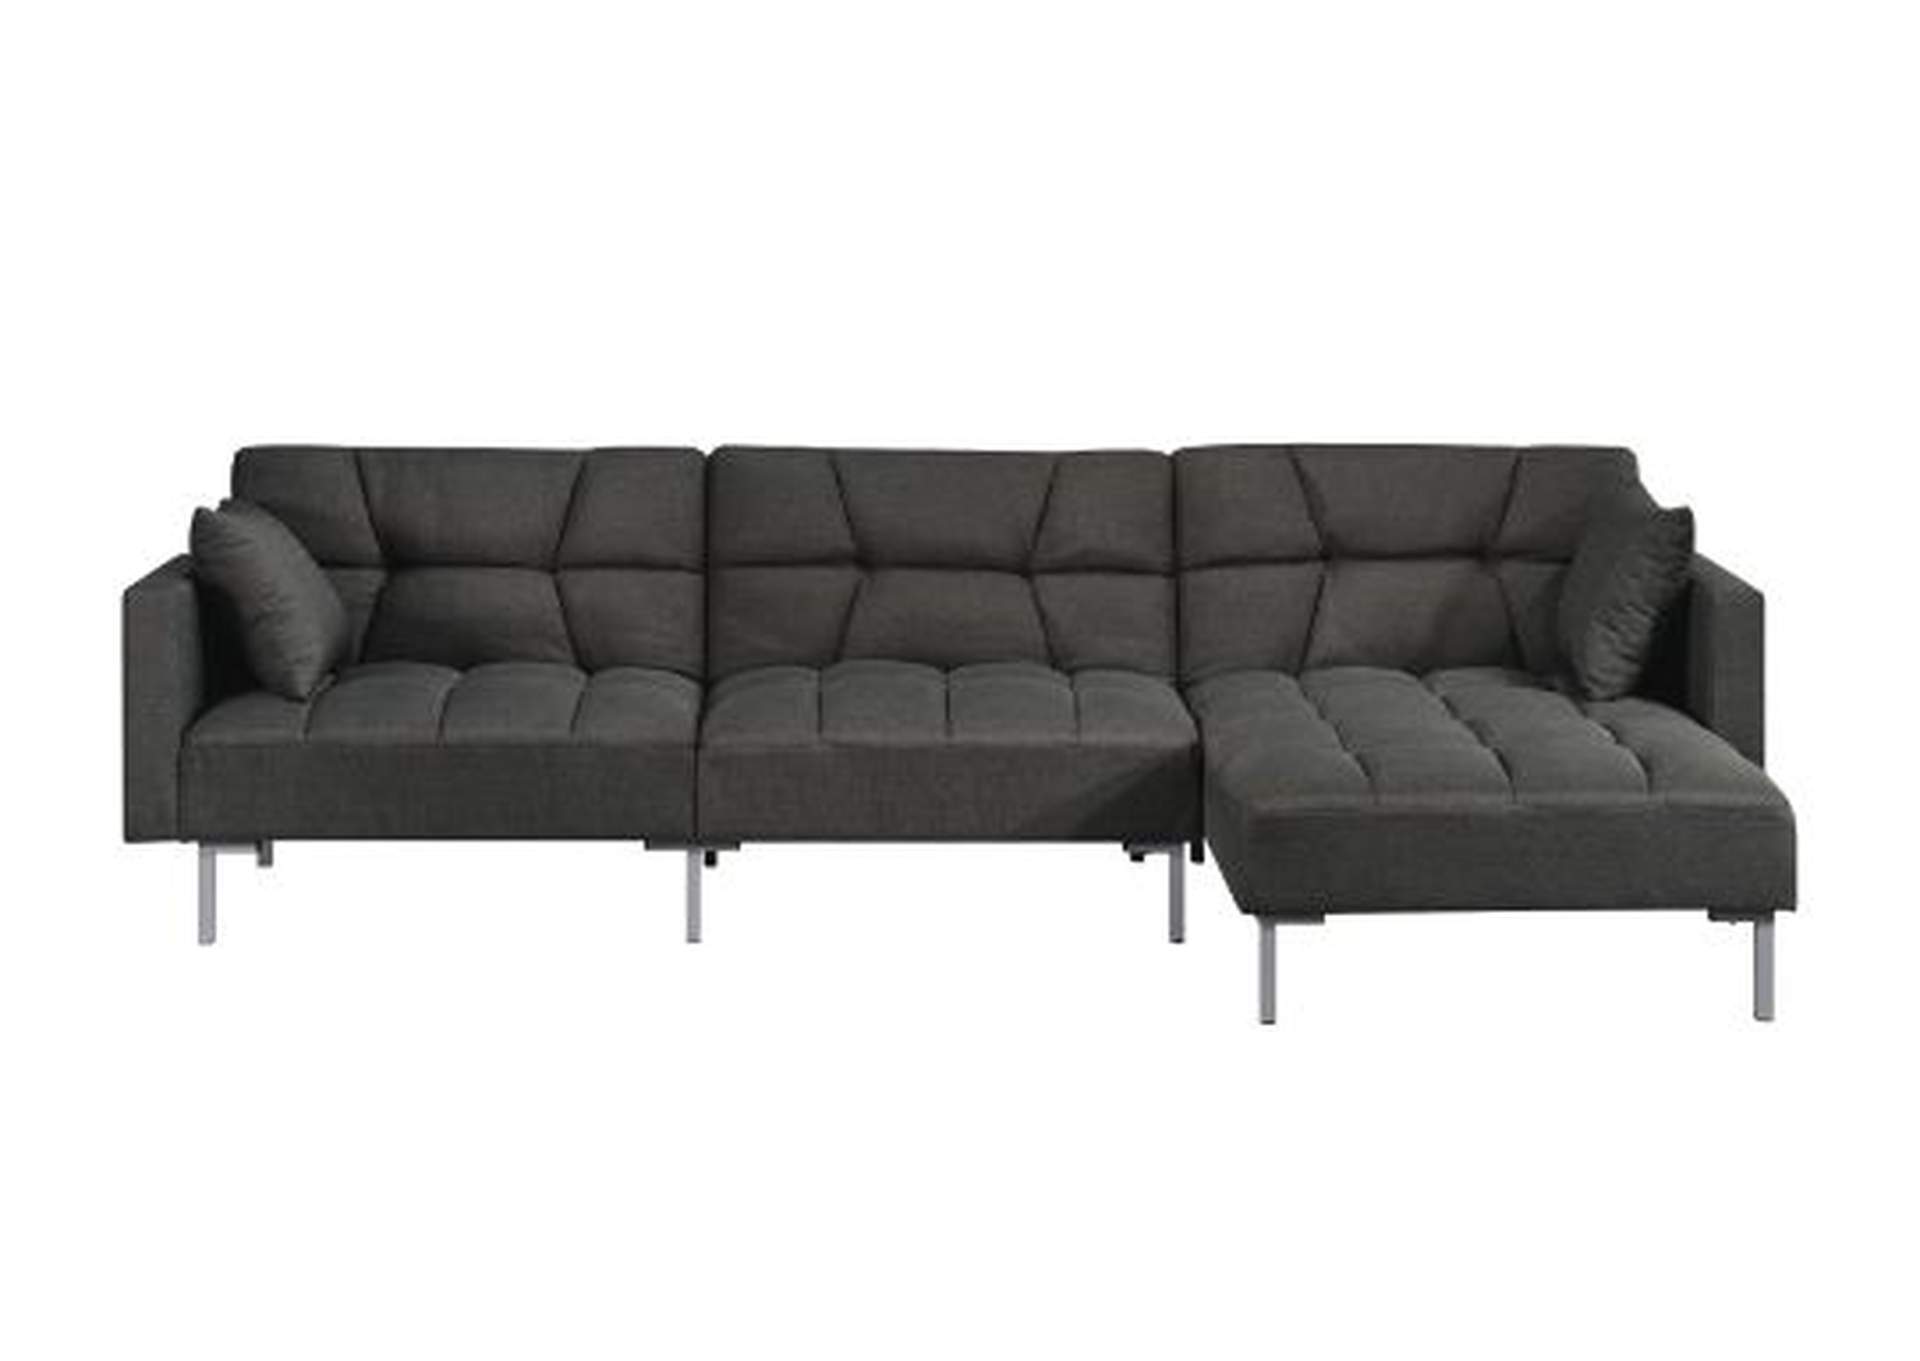 Duzzy Sectional sofa,Acme